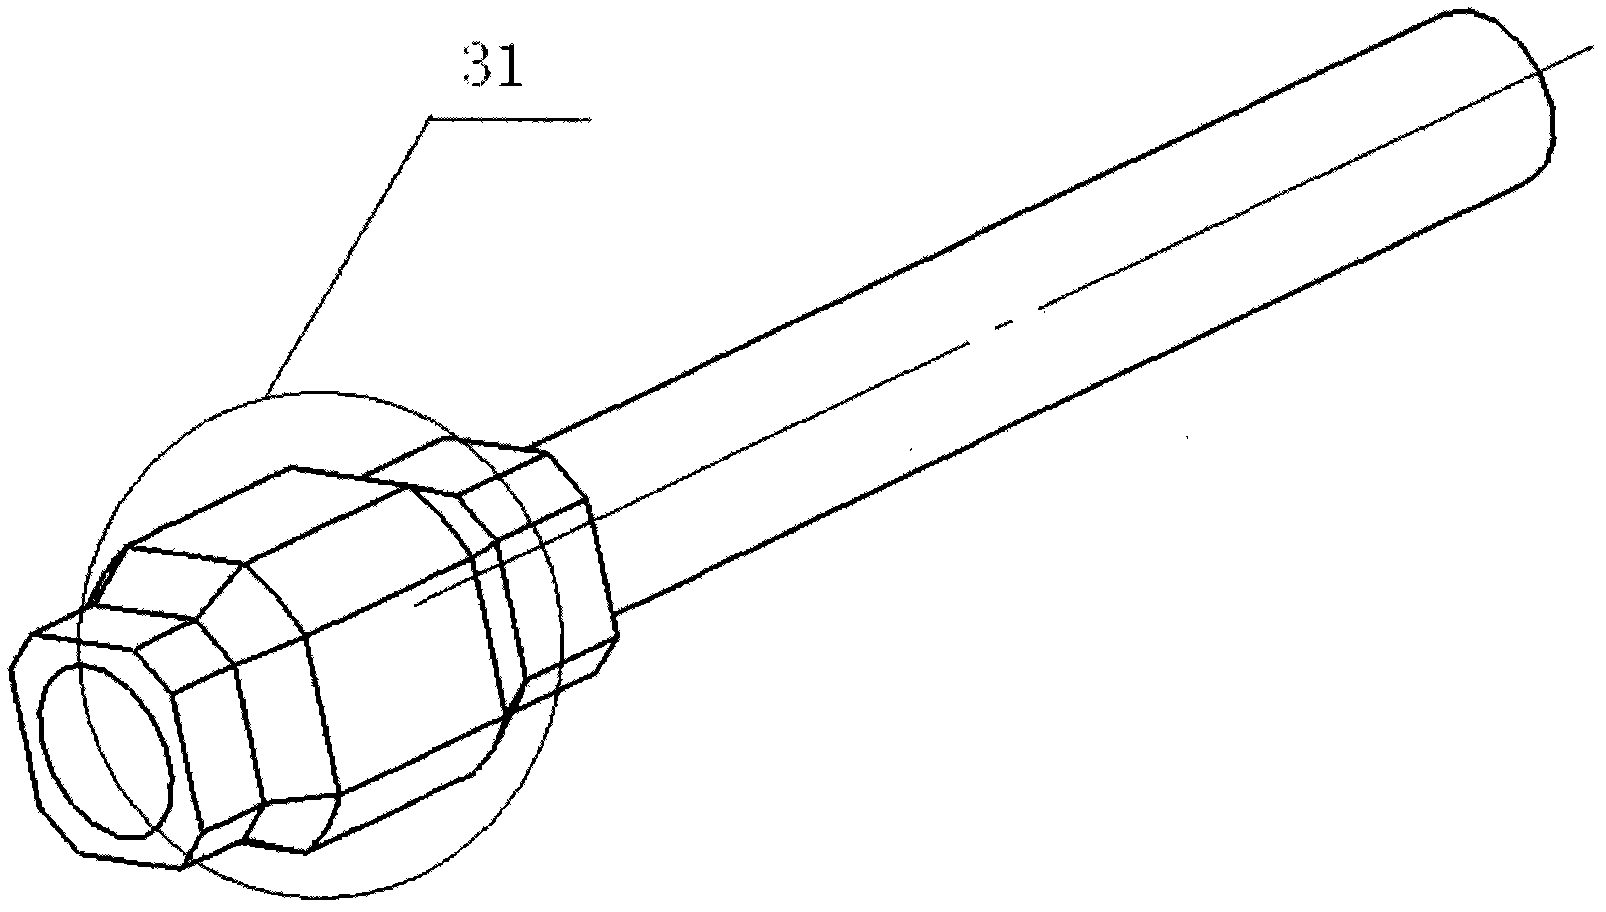 Actuator cylinder position locking and unlocking mechanism